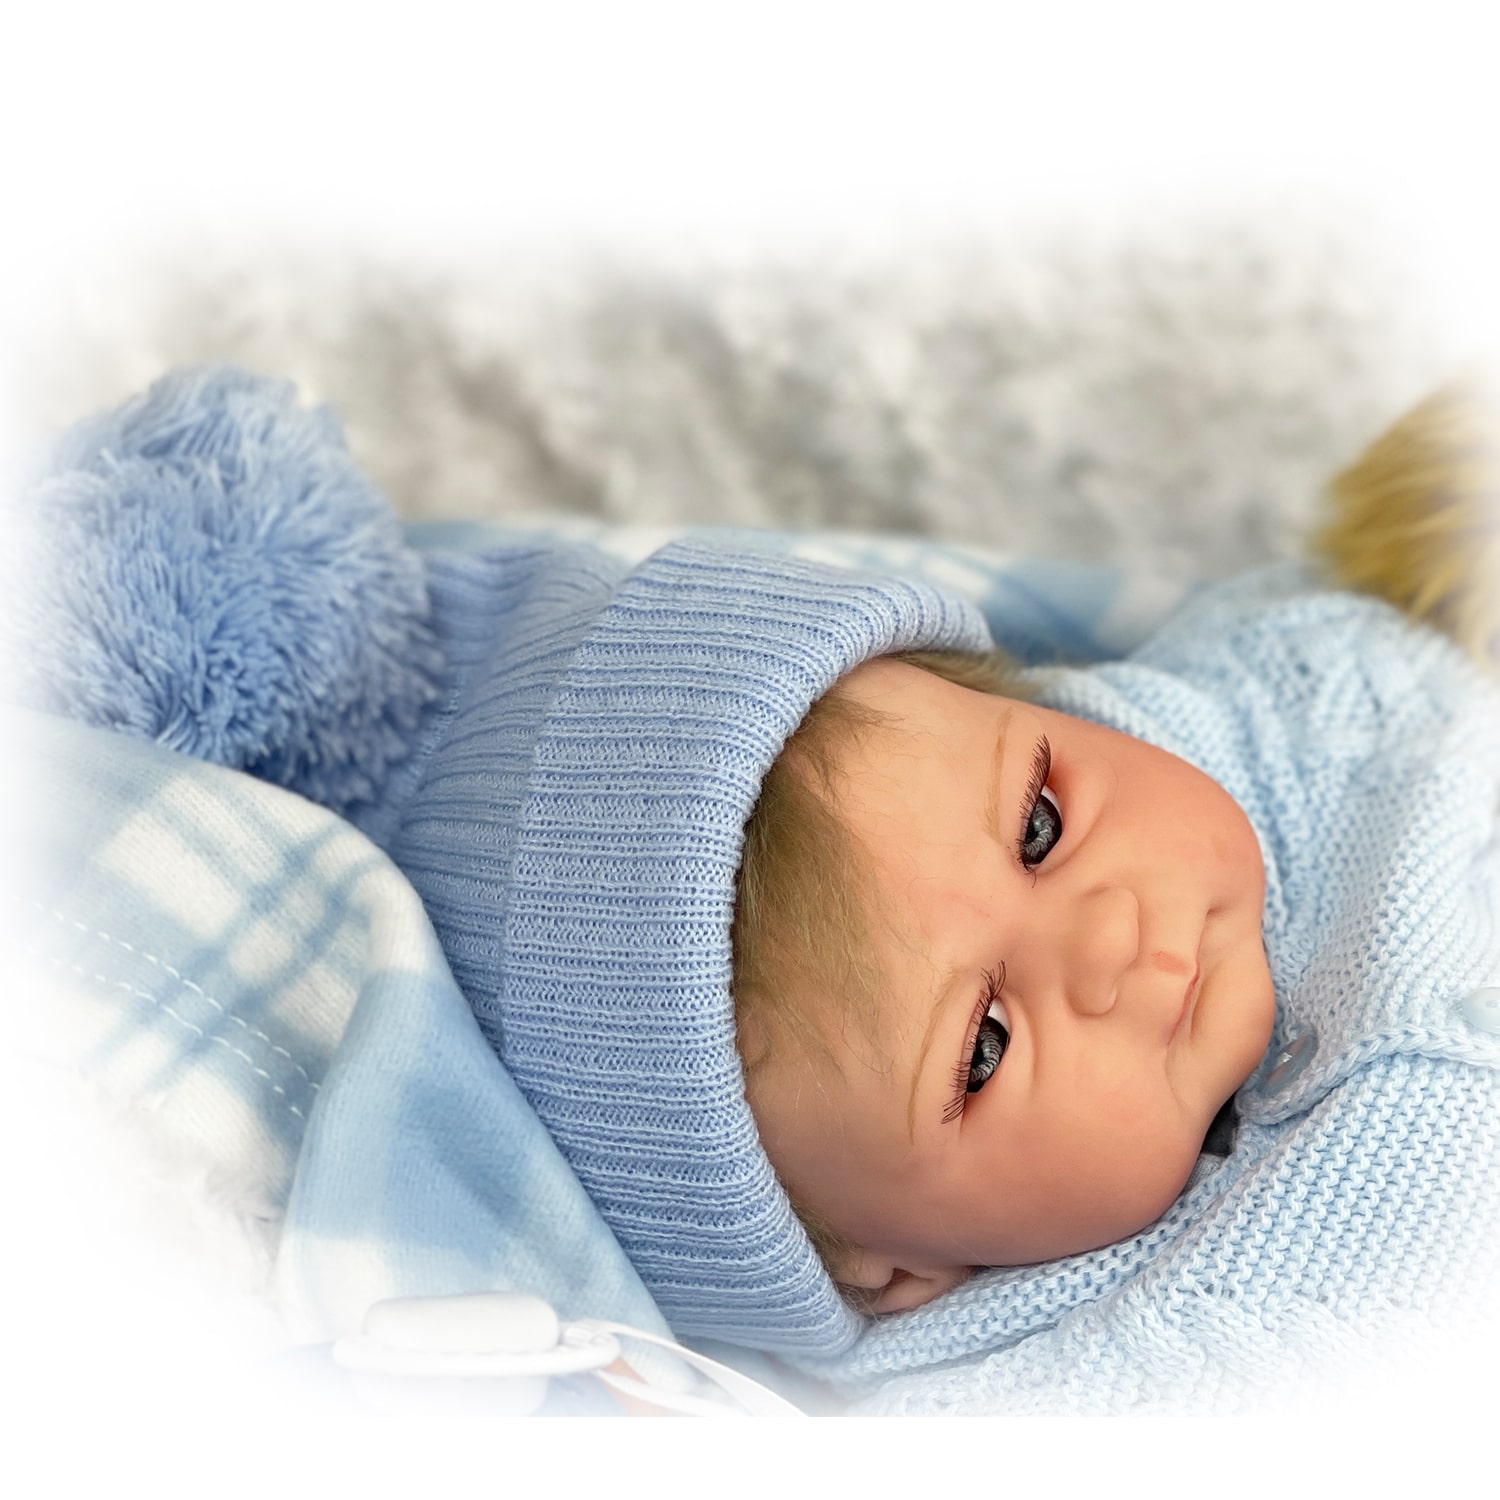 Samuel Reborn Baby.jpg 1-min (1)